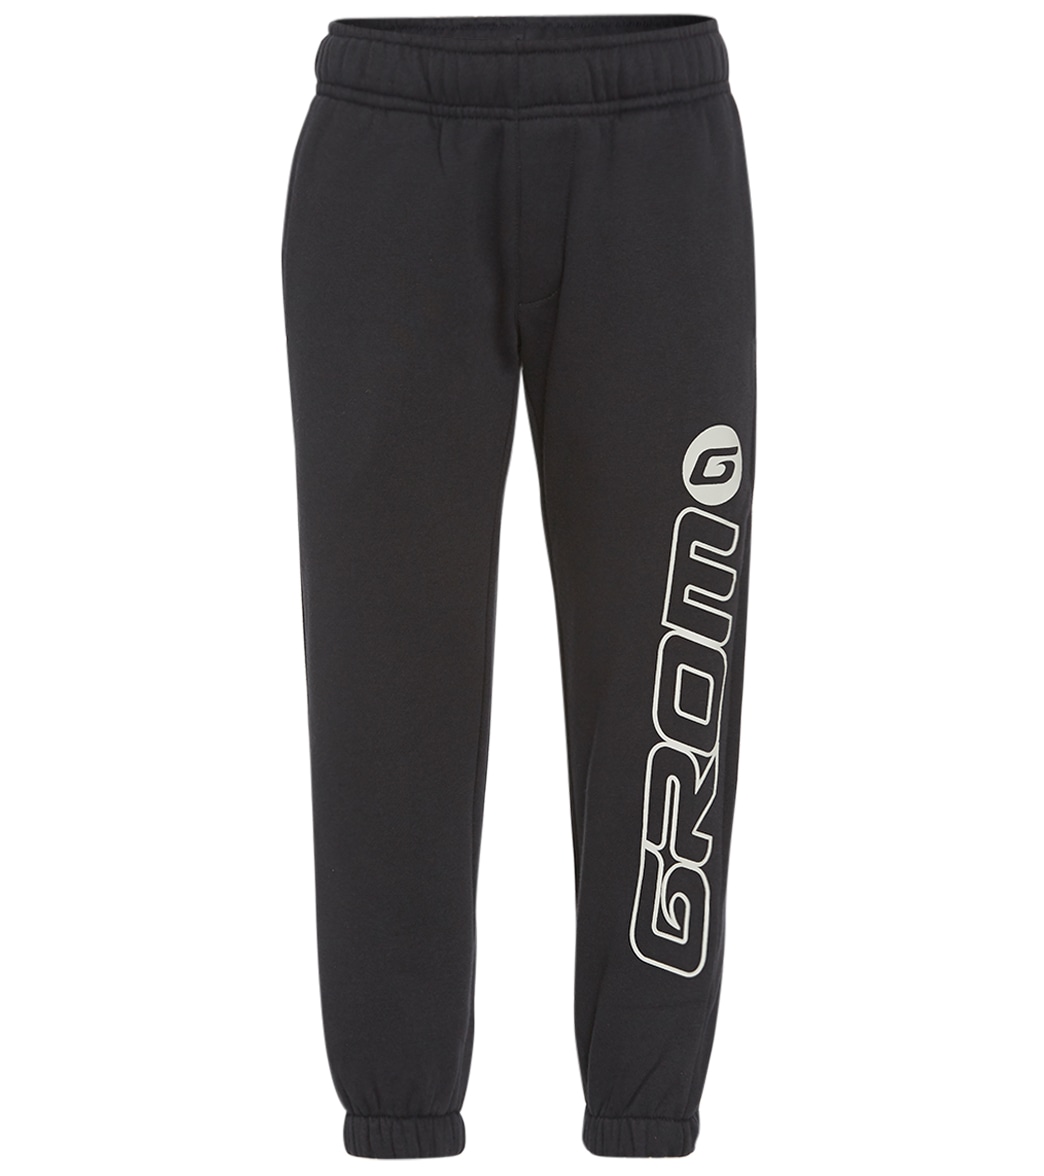 Grom Boys' Circle G Sweatpant - Black Large Cotton/Polyester - Swimoutlet.com